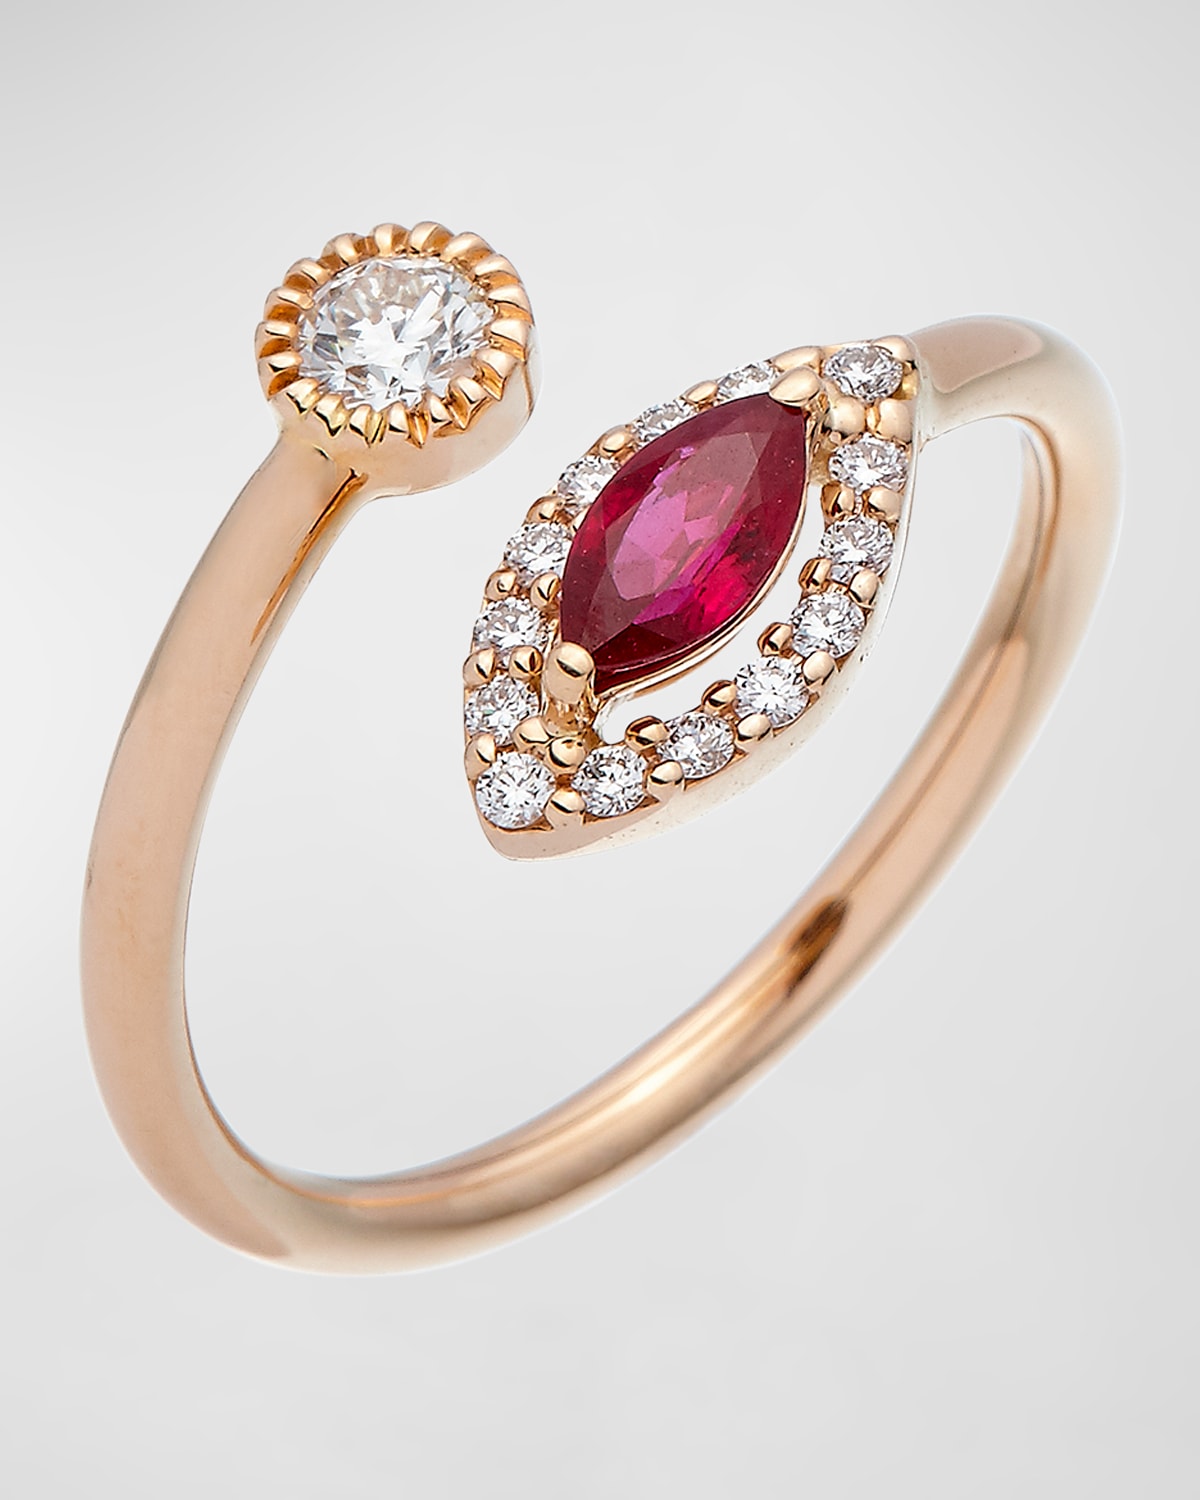 Positano 18k Rose Gold Diamond & Ruby Bypass Ring, Size 6